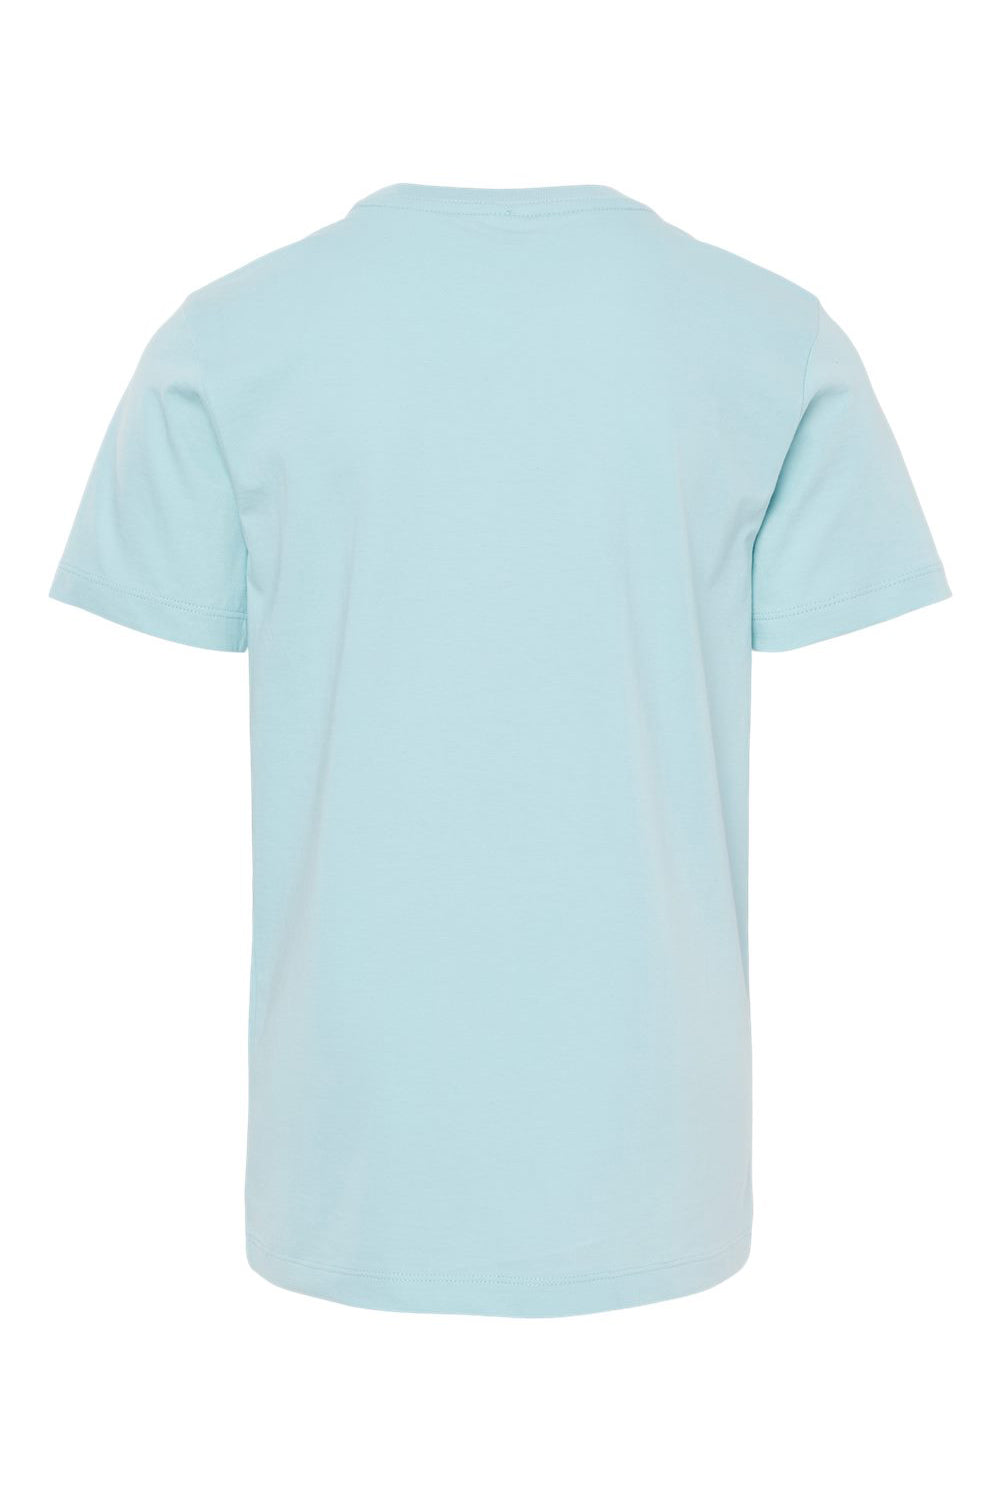 SoftShirts 402 Youth Organic Short Sleeve Crewneck T-Shirt Chambray Blue Flat Back